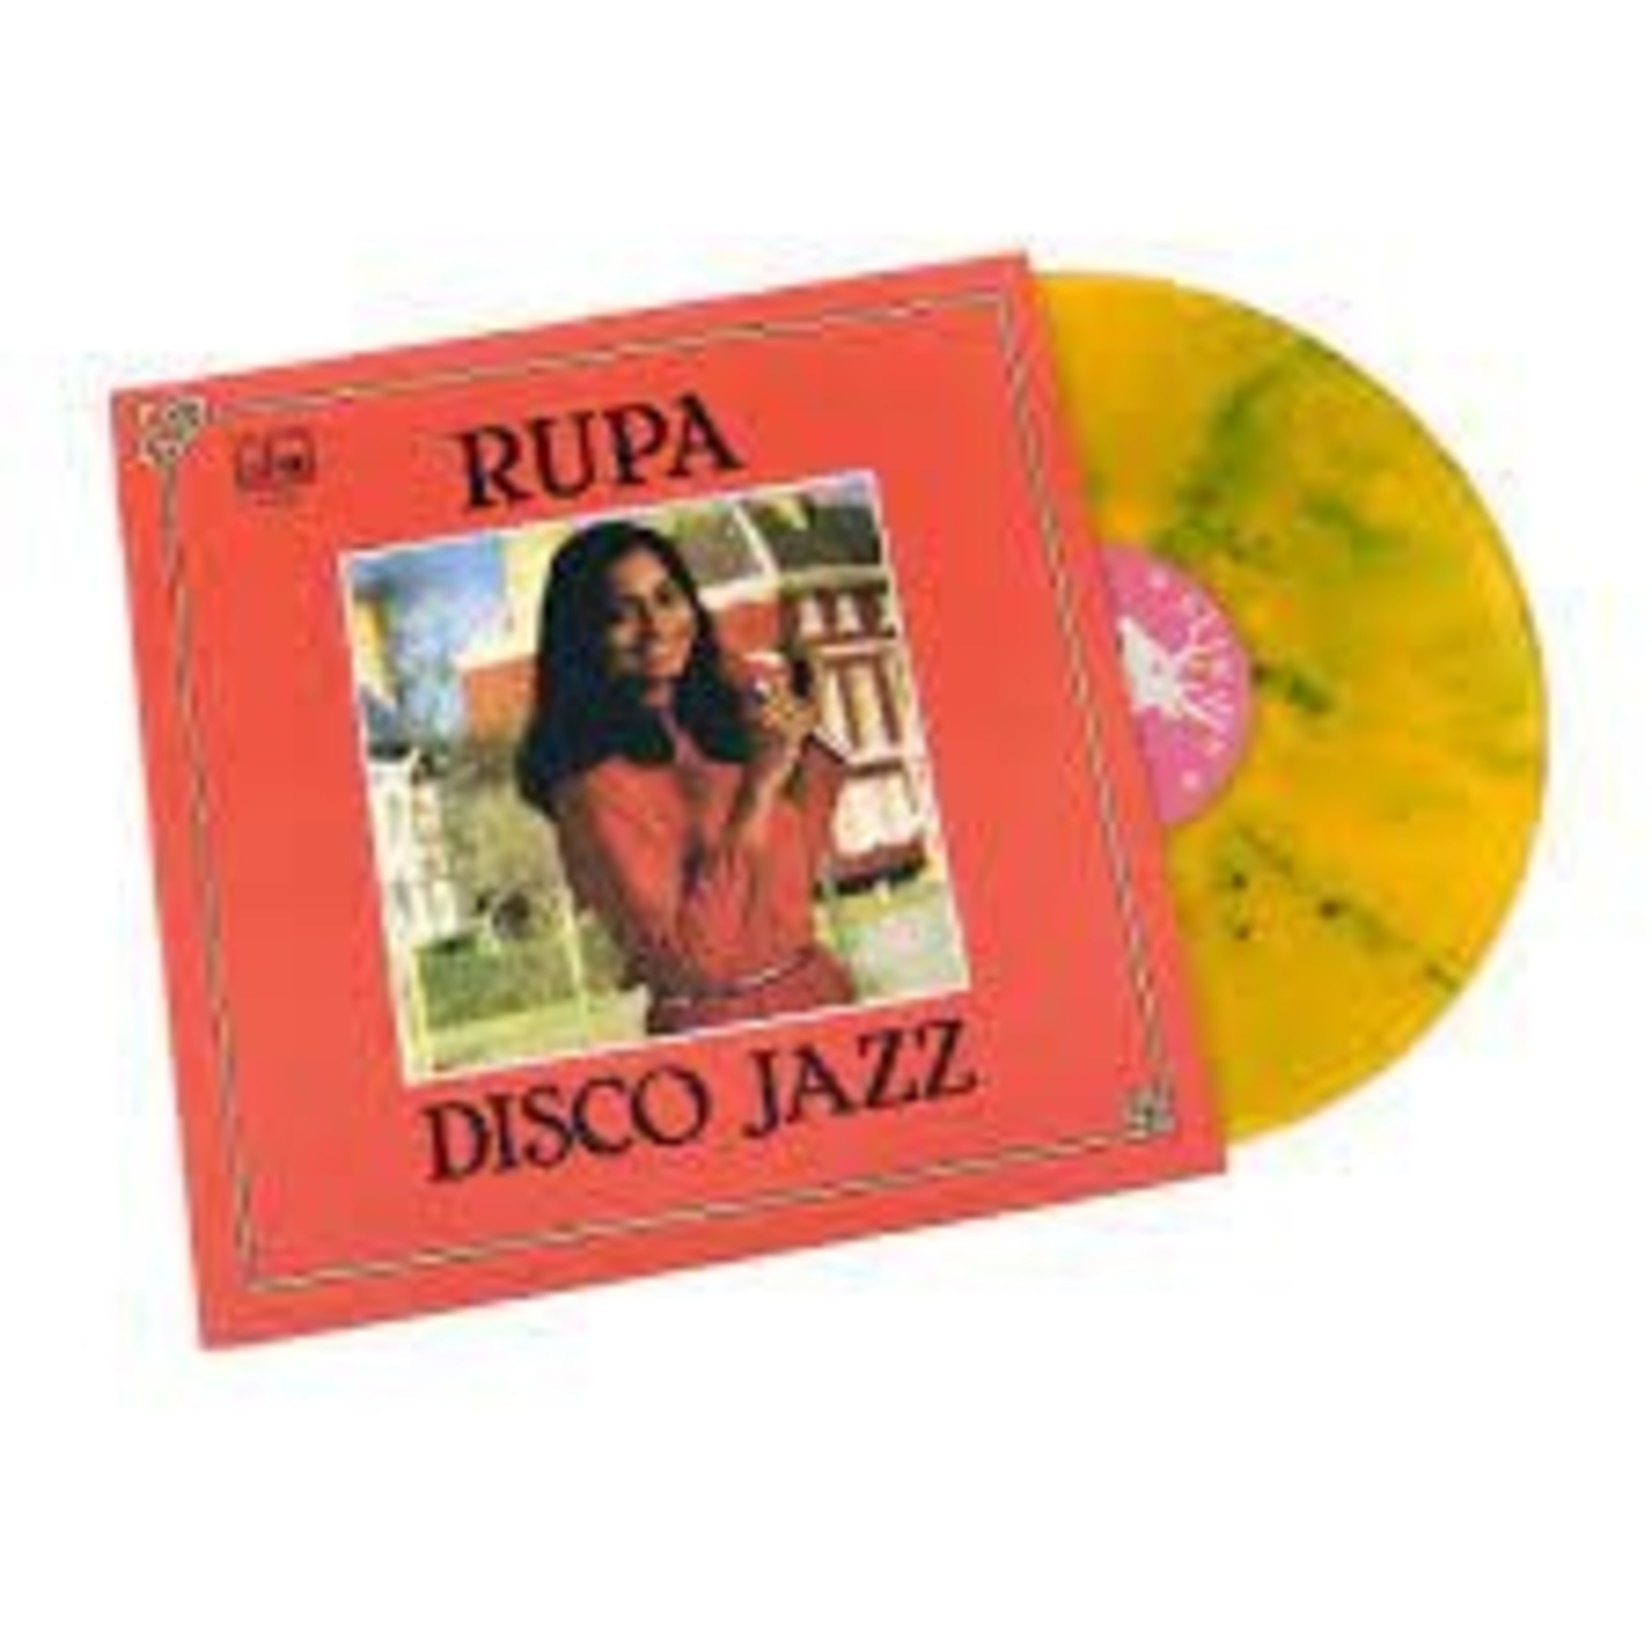 [New] Rupa - Disco Jazz (sunsugar coloured vinyl)